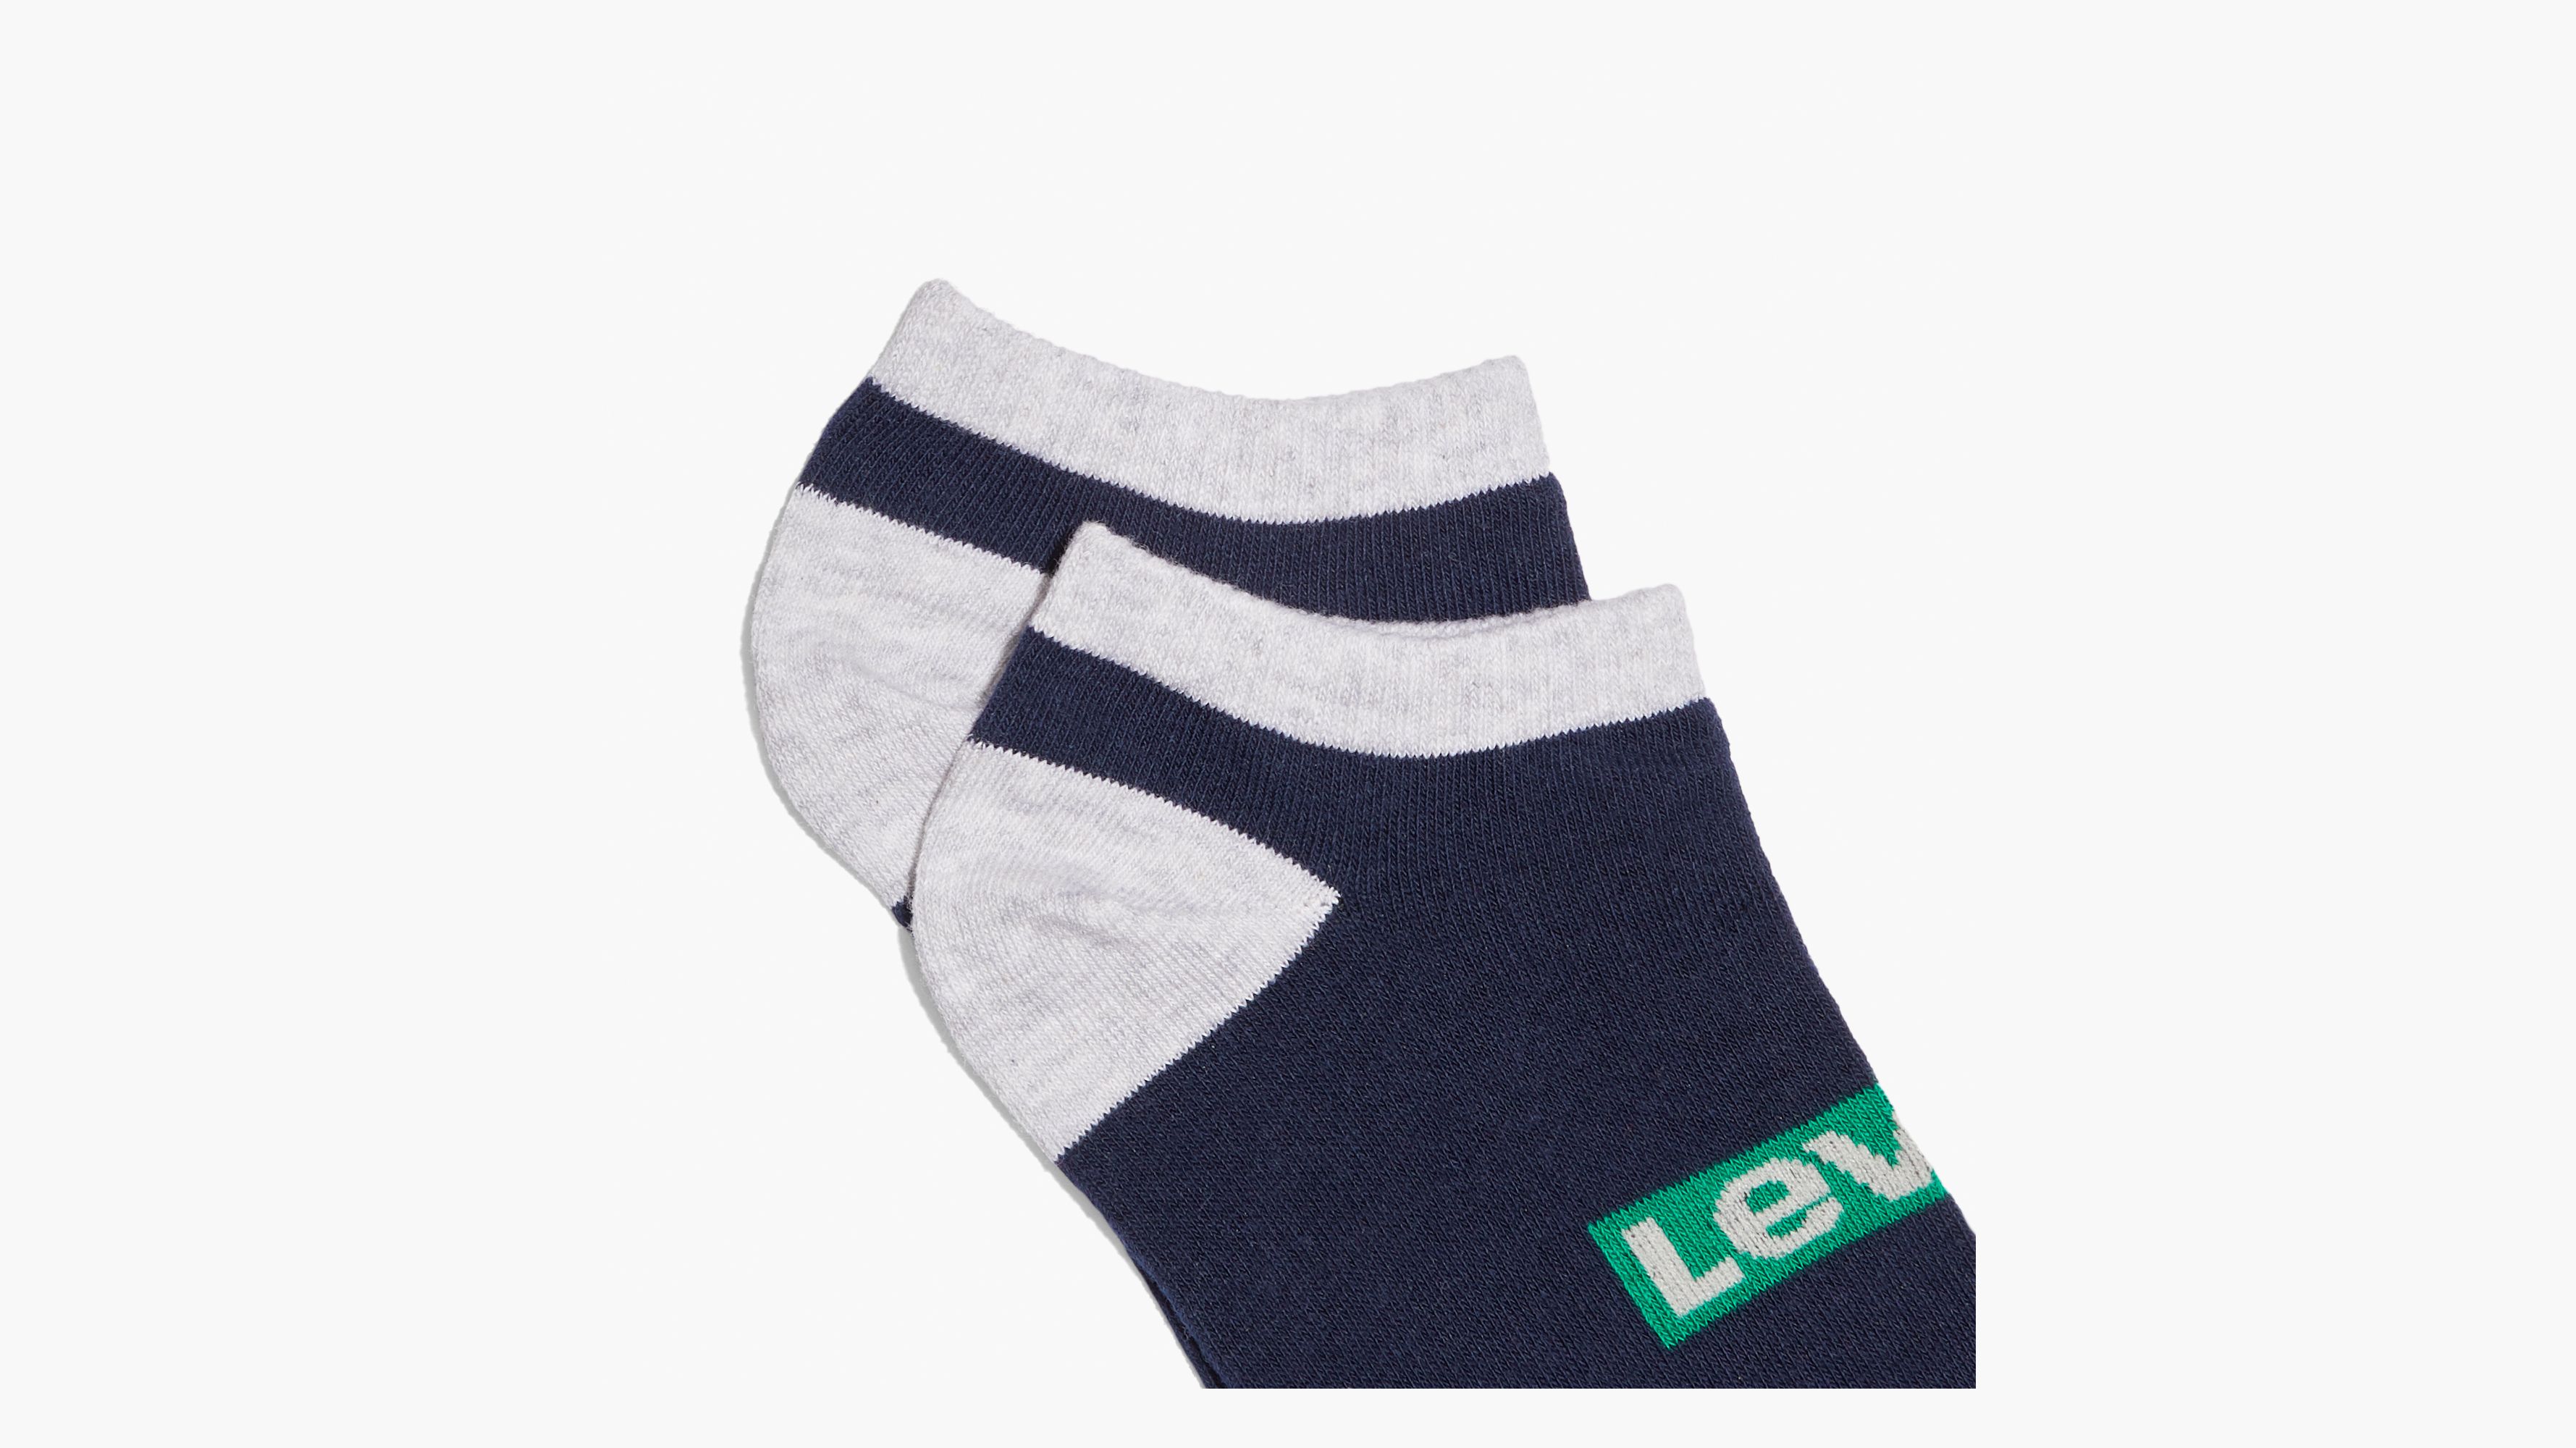 levis socks price